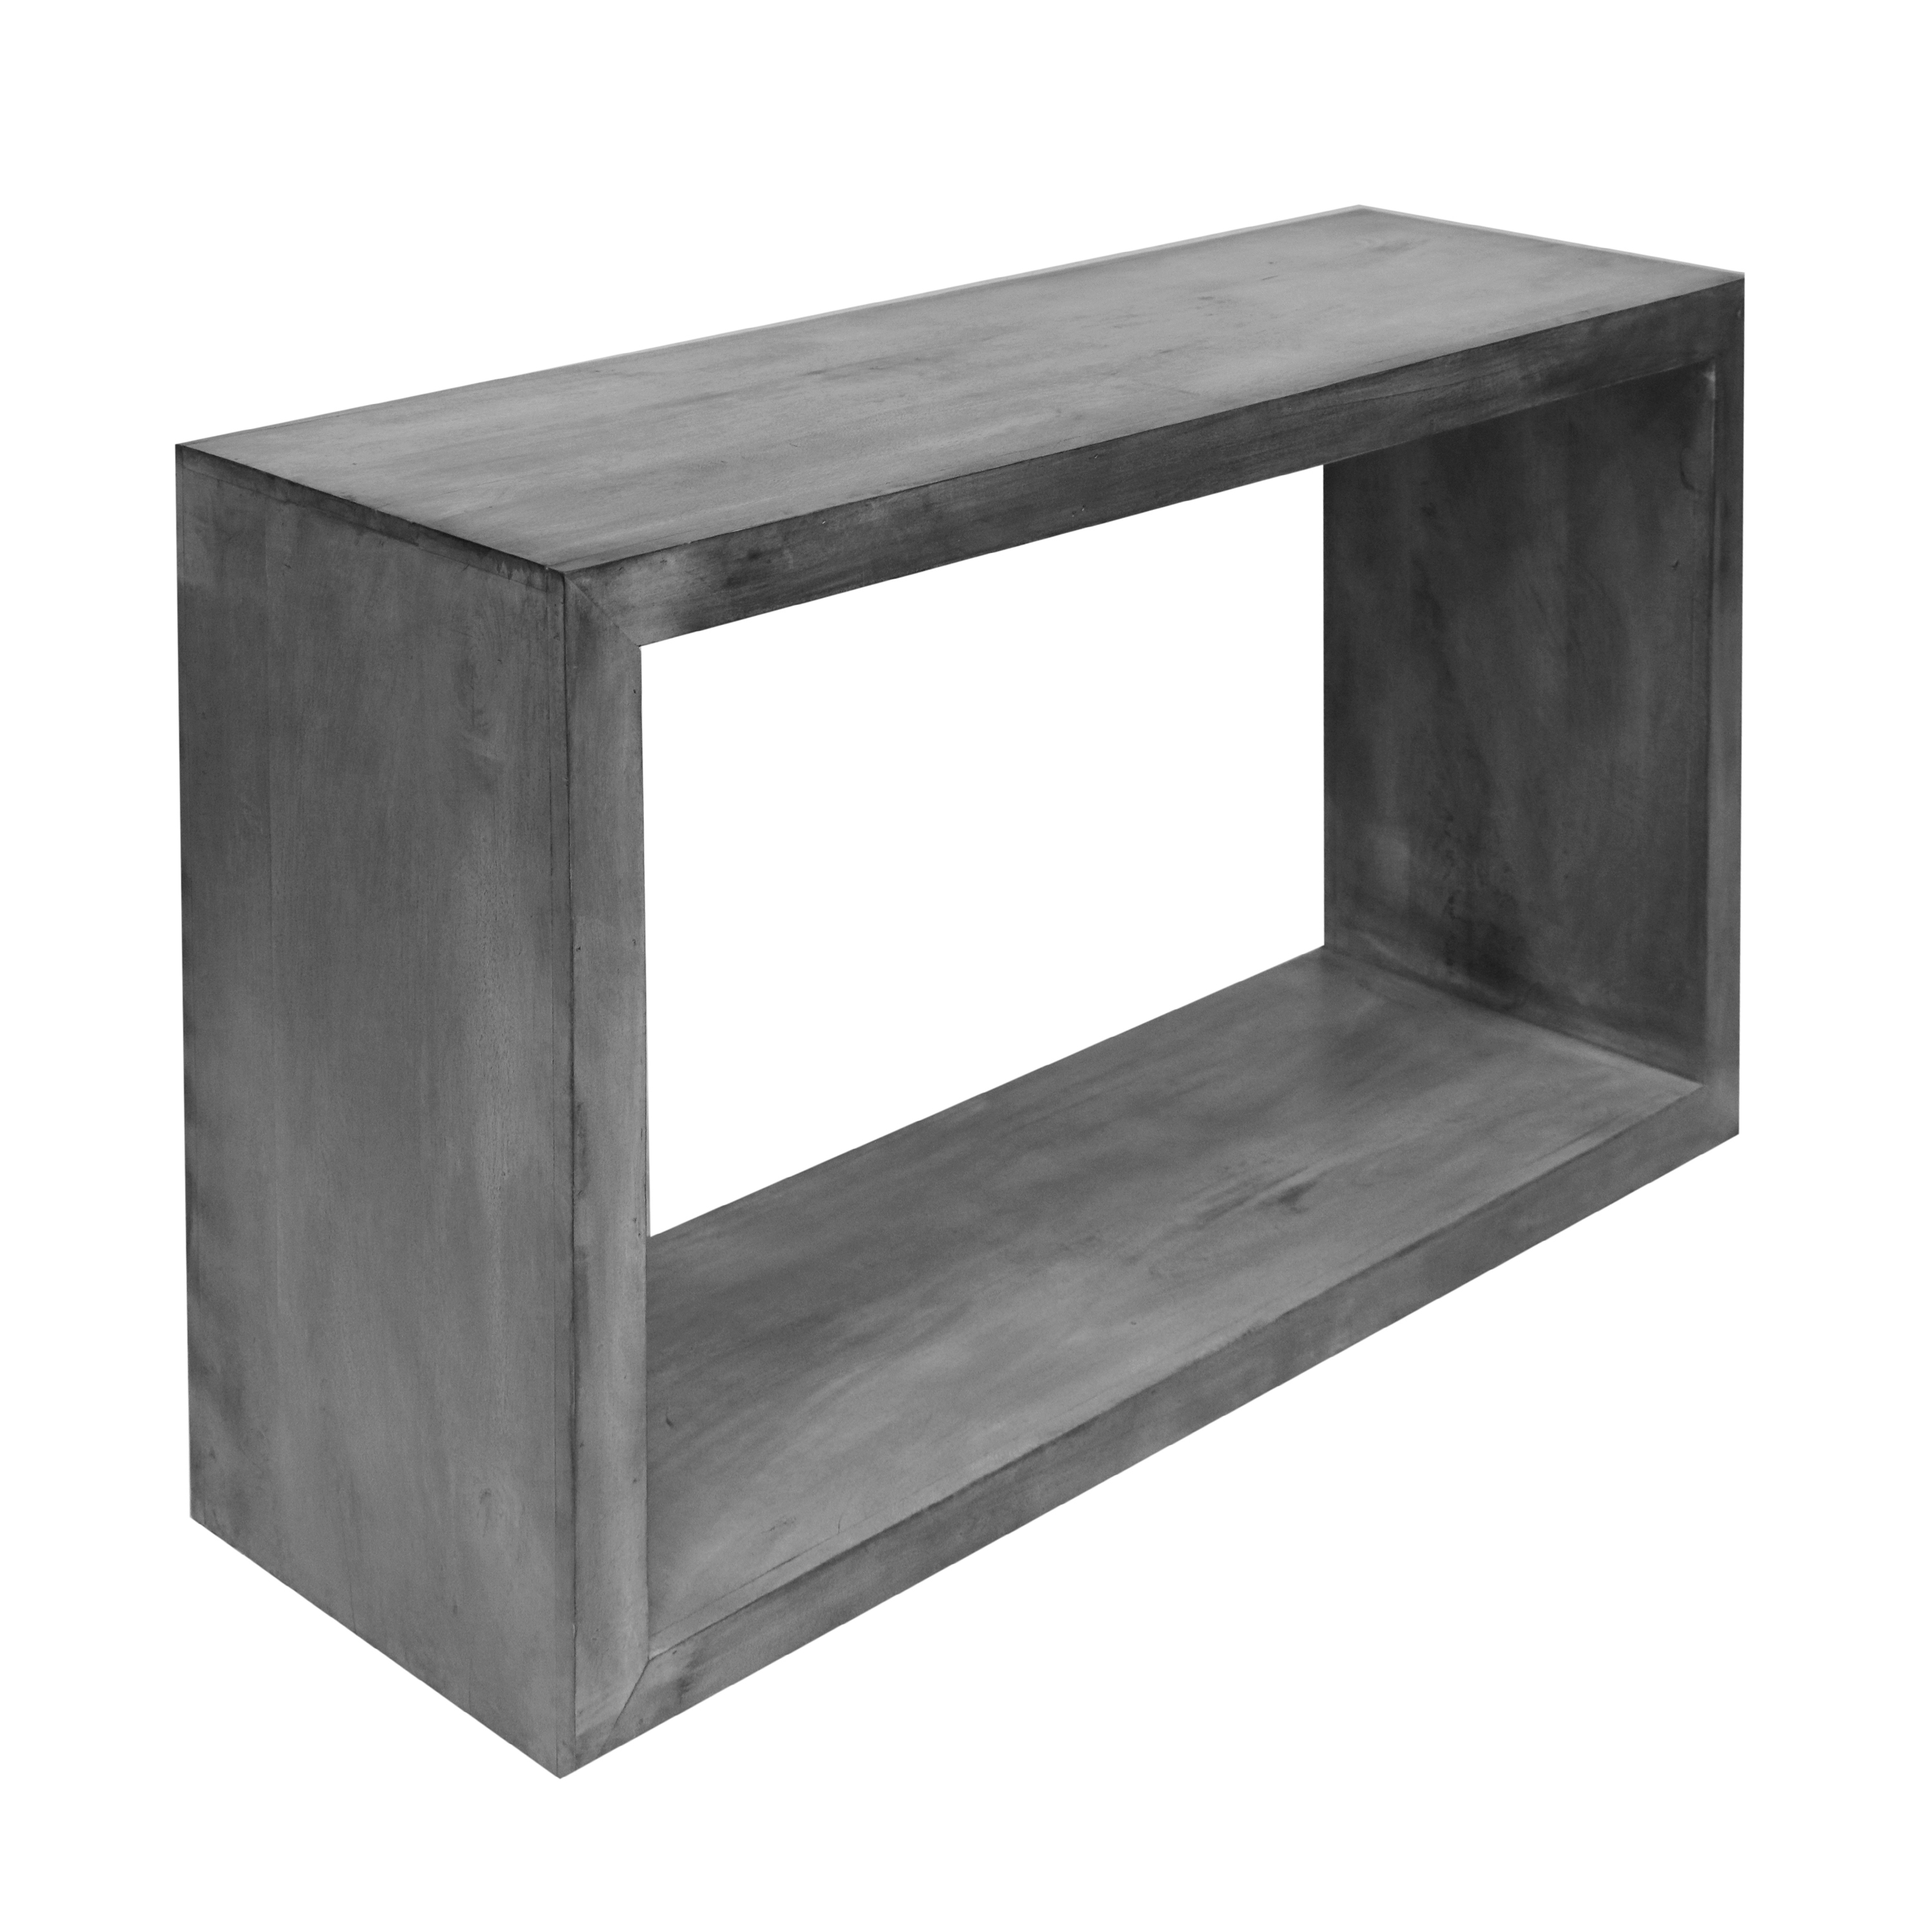 52 Cube Shape Wooden Console Table With Open Bottom Shelf, Charcoal Gray- Saltoro Sherpi